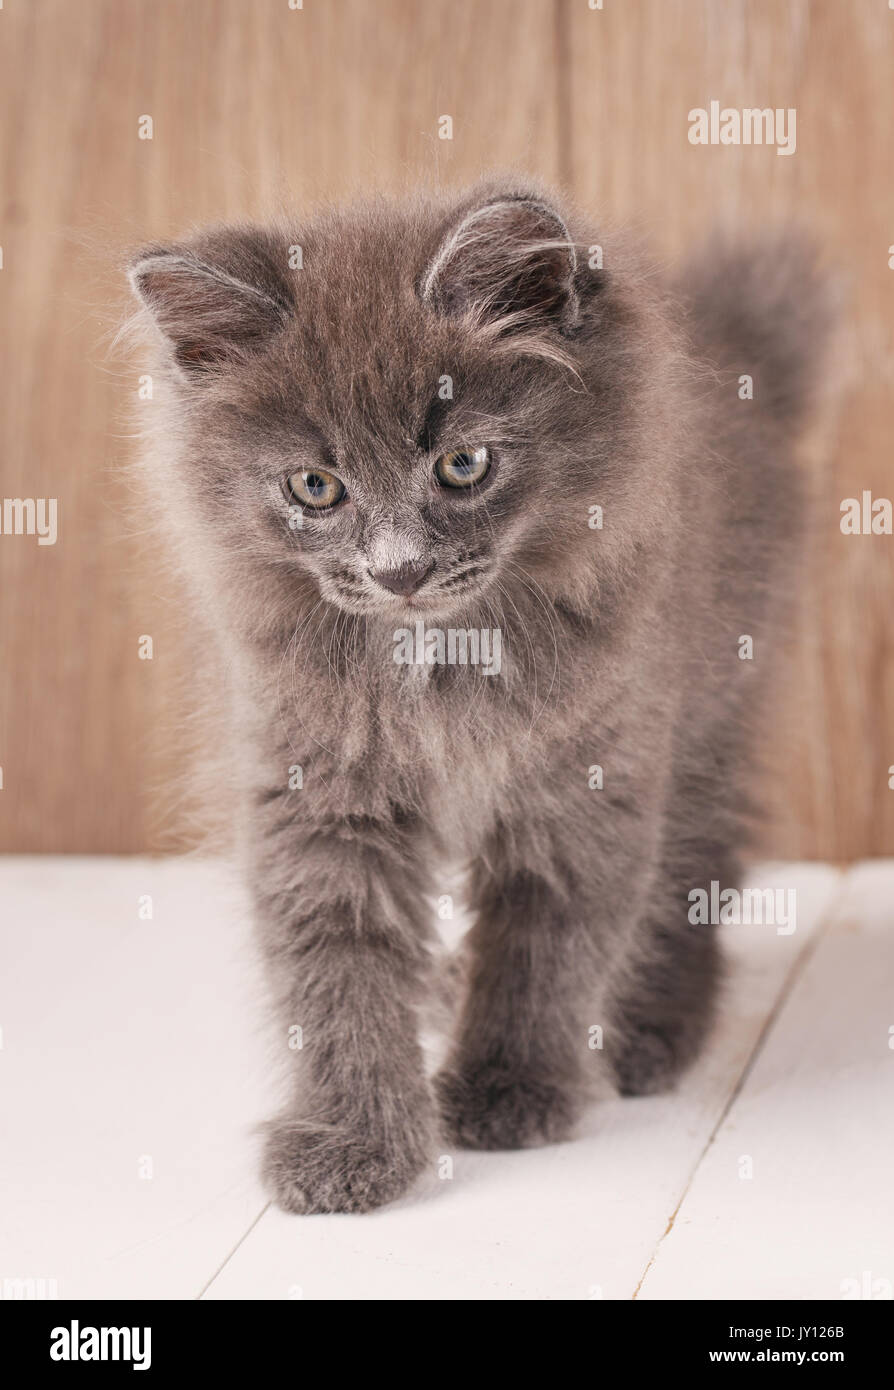 Gray cute kitten walks on wooden boards. Stock Photo